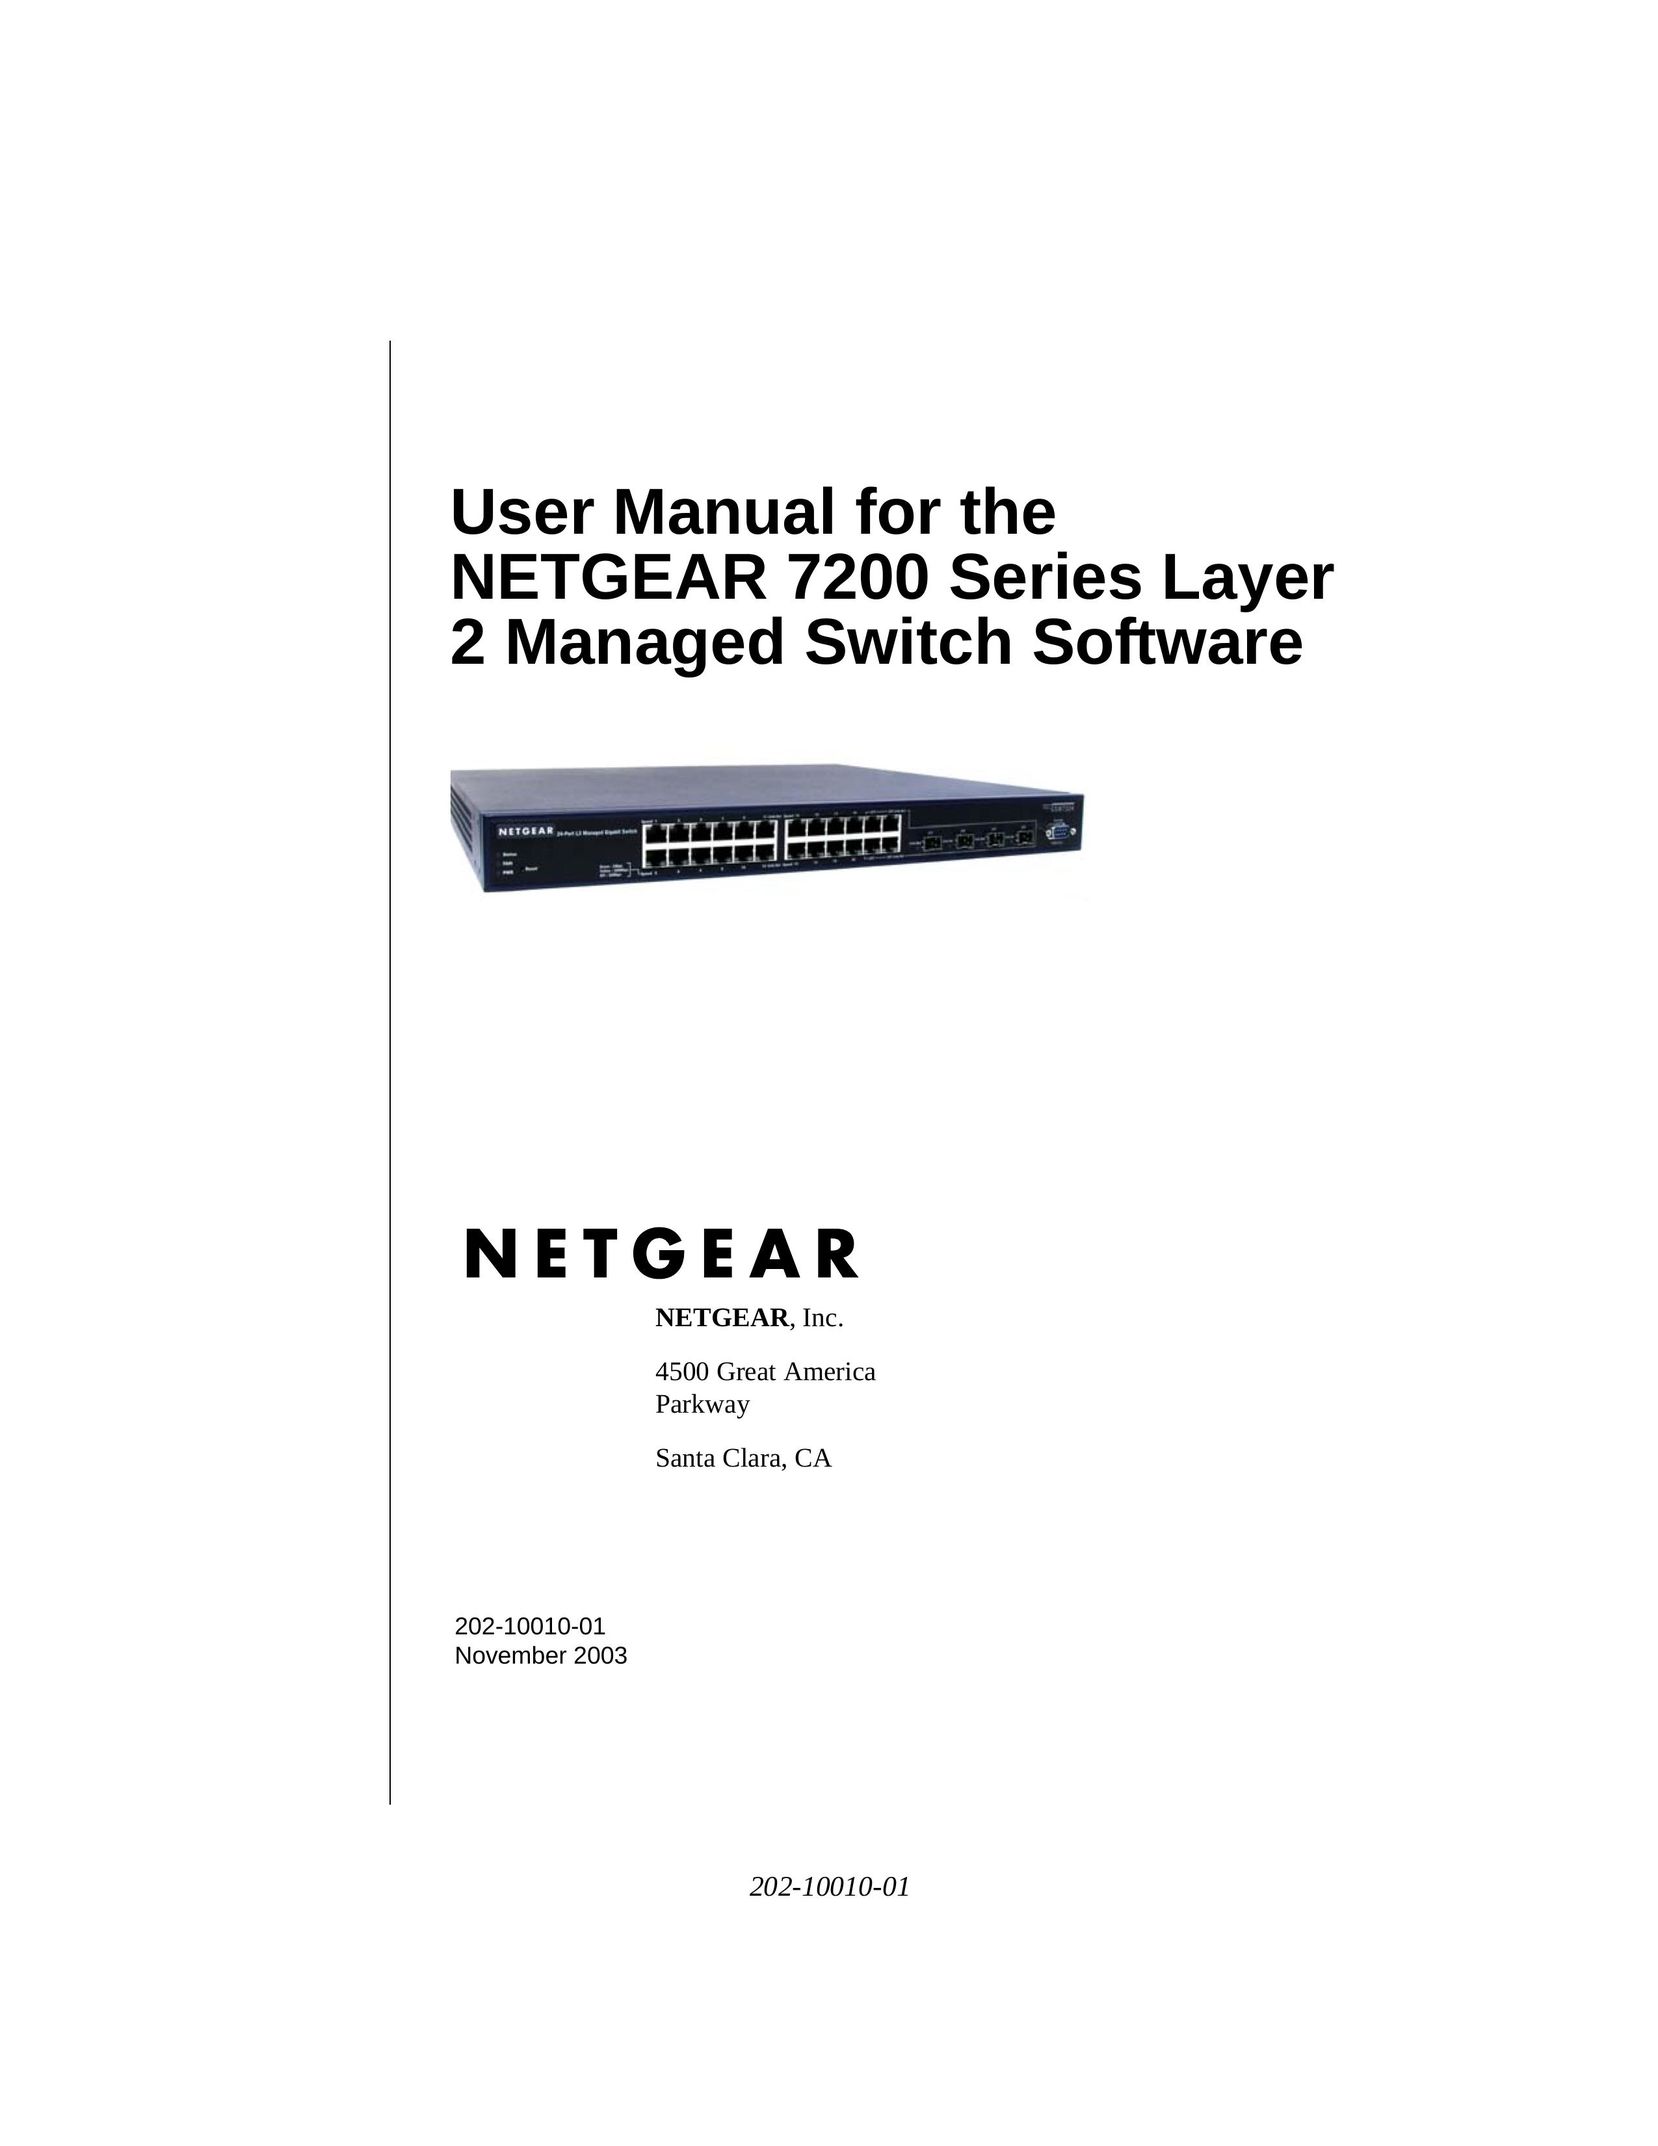 NETGEAR 7200 Series Network Card User Manual